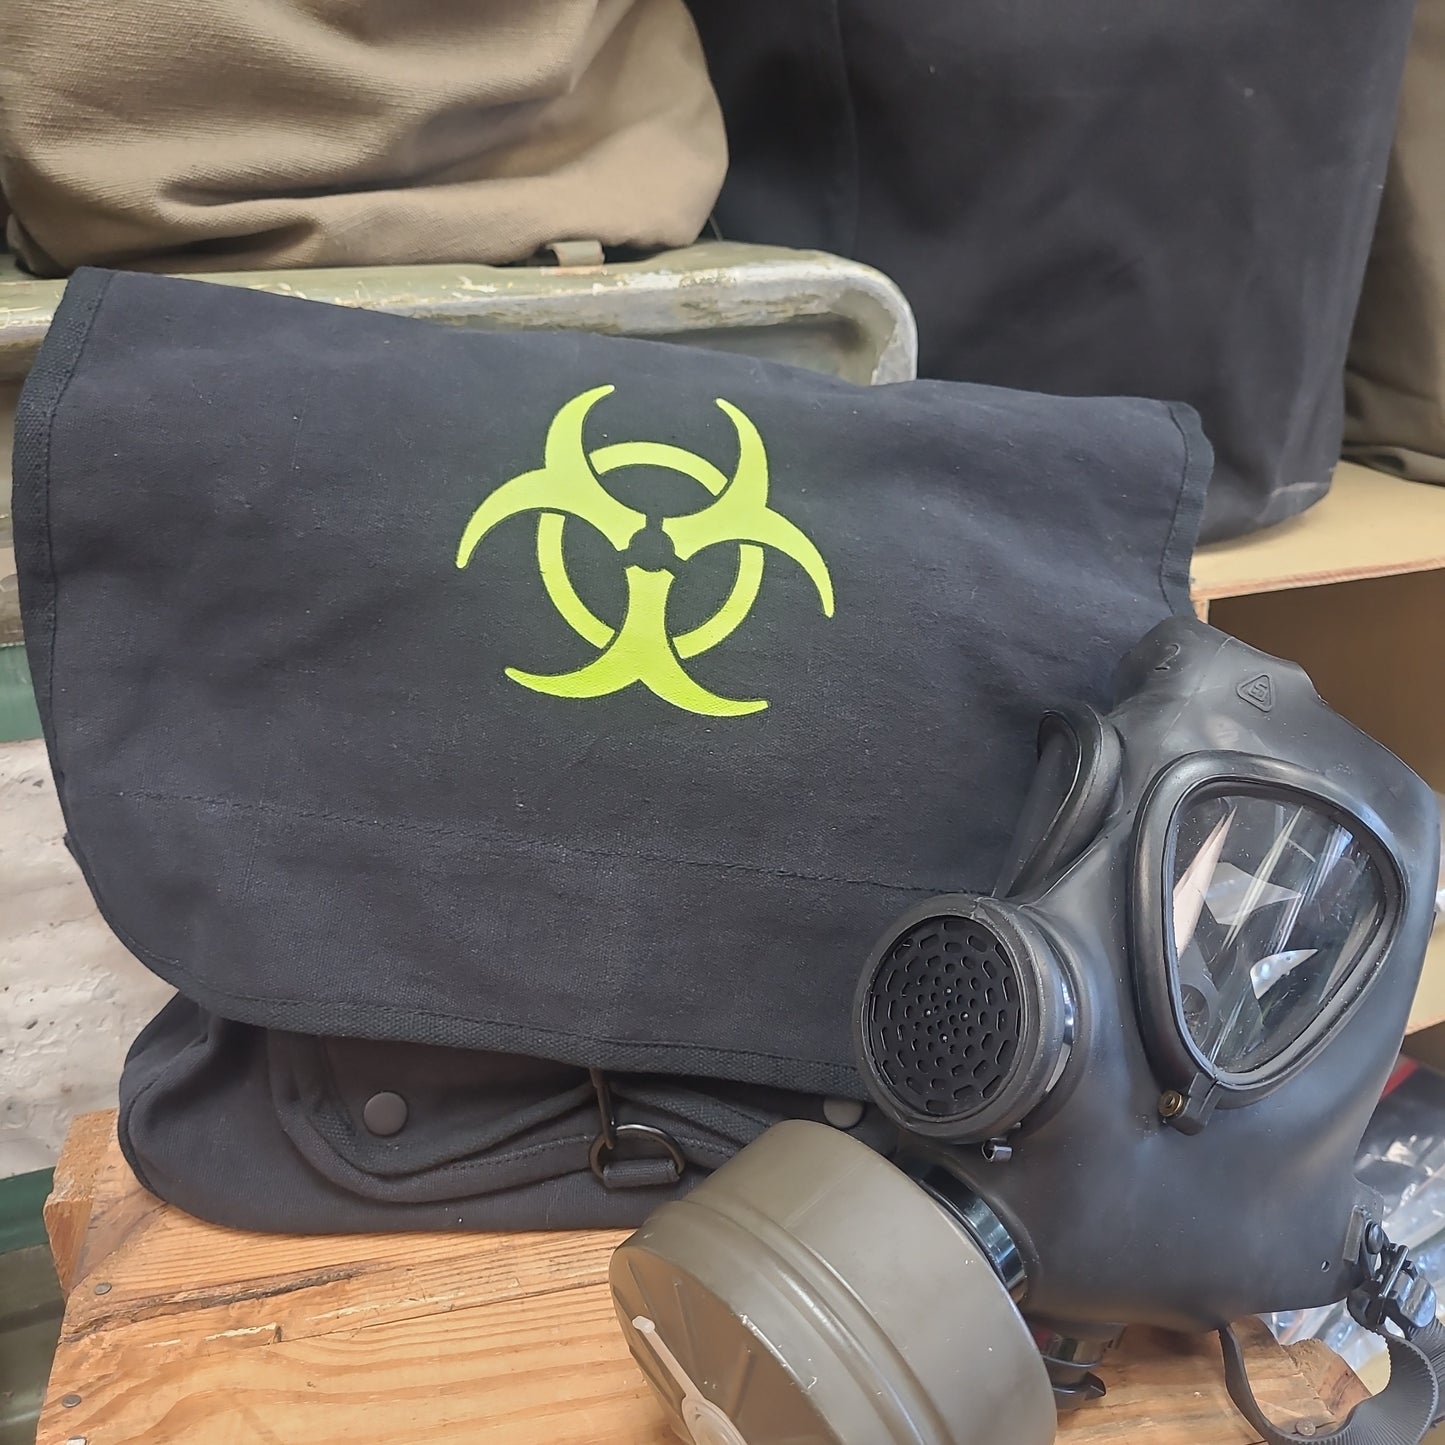 Vintage Bio-Hazard Messenger Bag